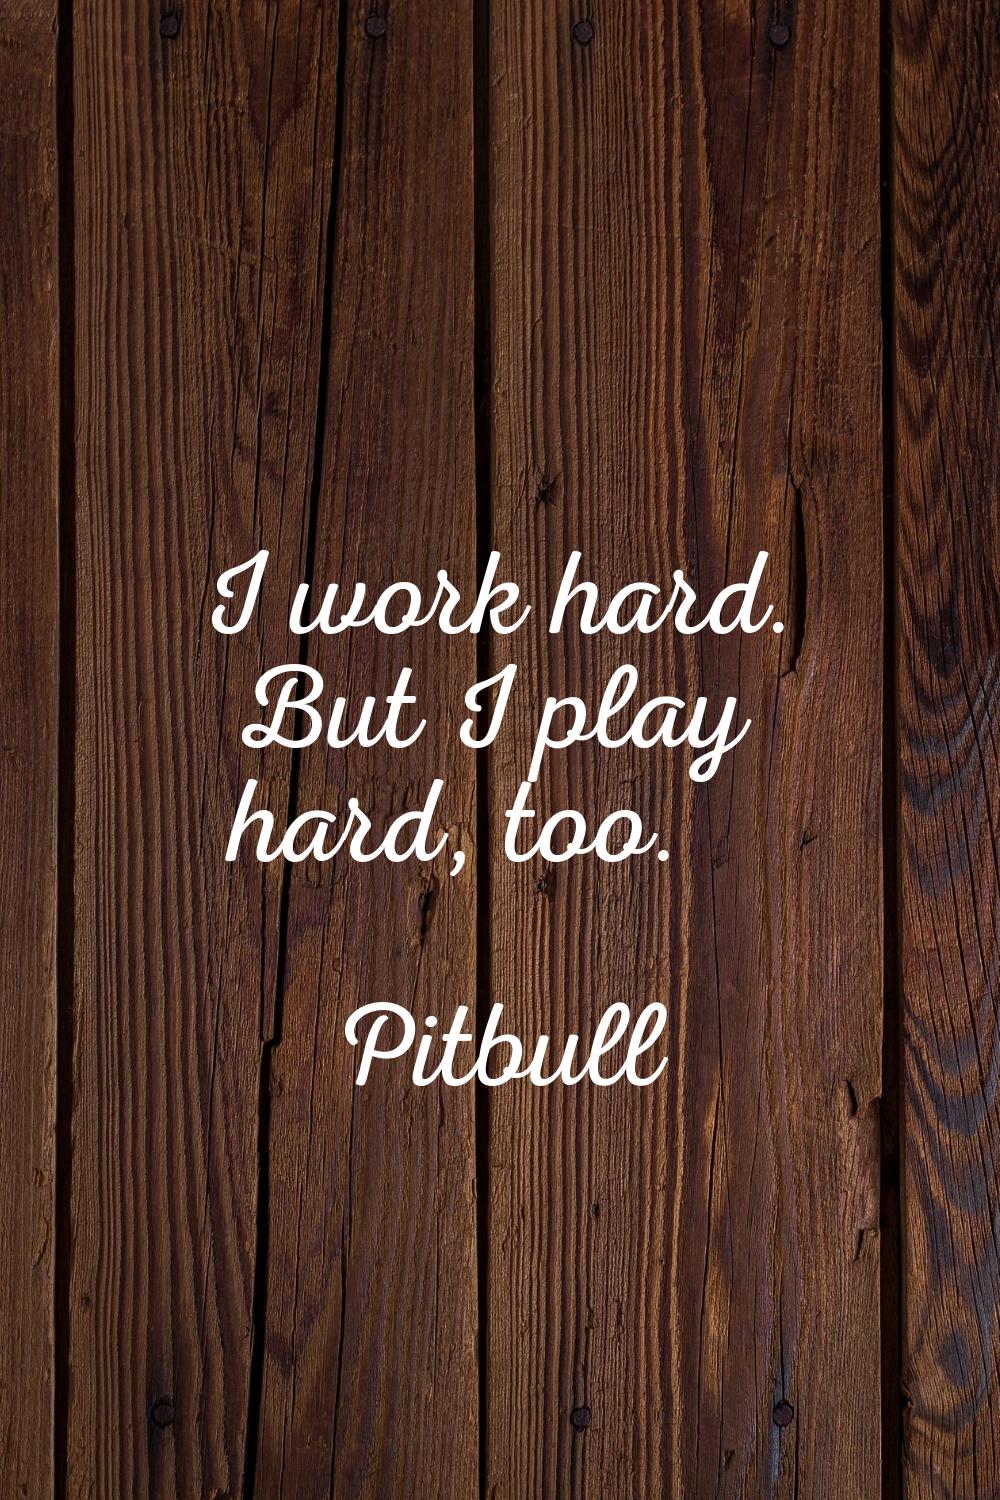 I work hard. But I play hard, too.